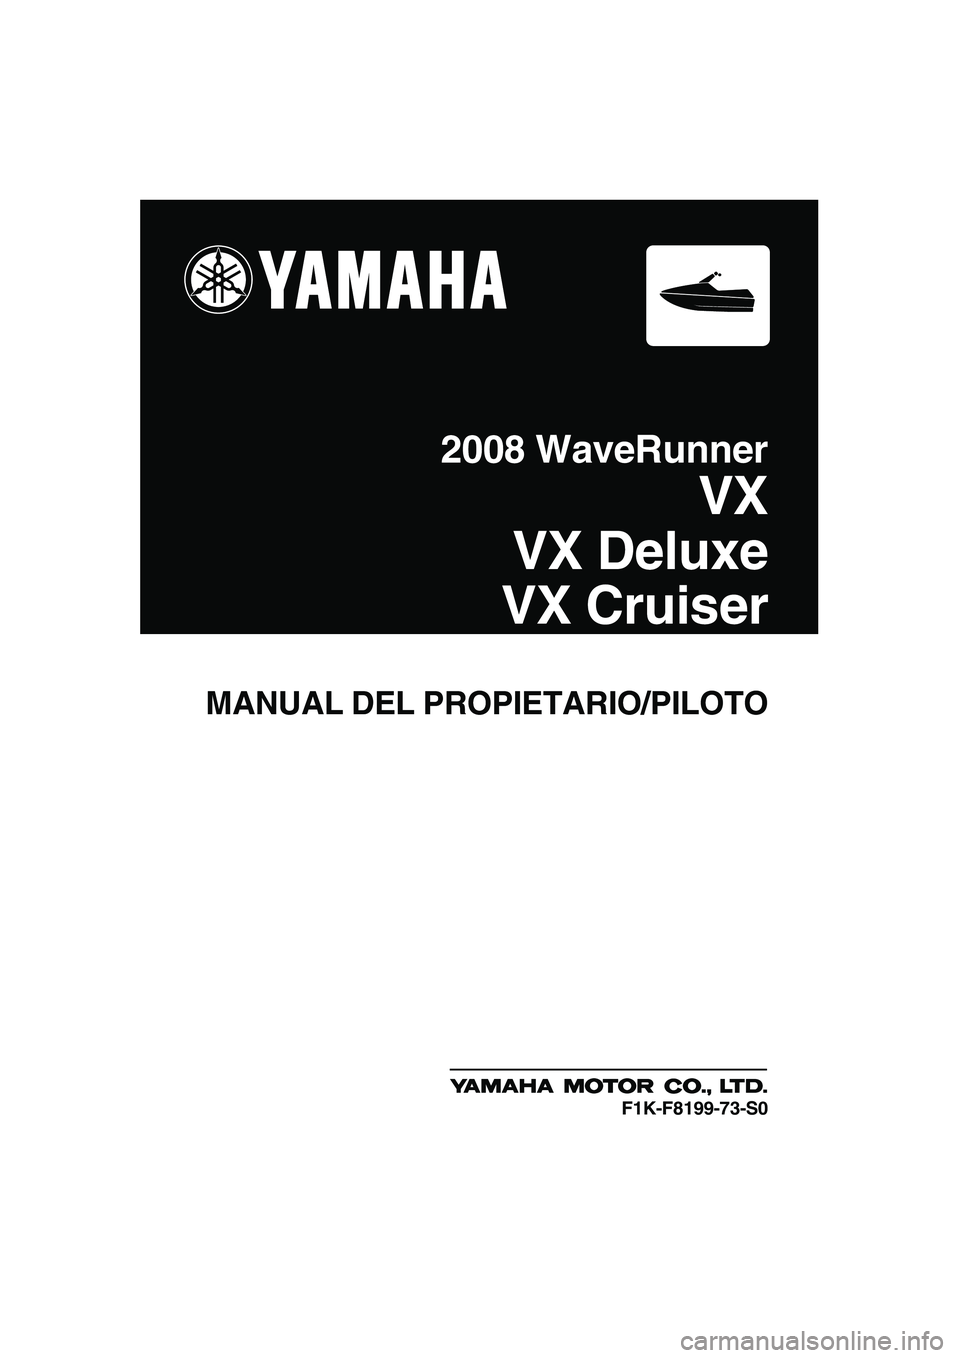 YAMAHA VX 2008  Manuale de Empleo (in Spanish) 